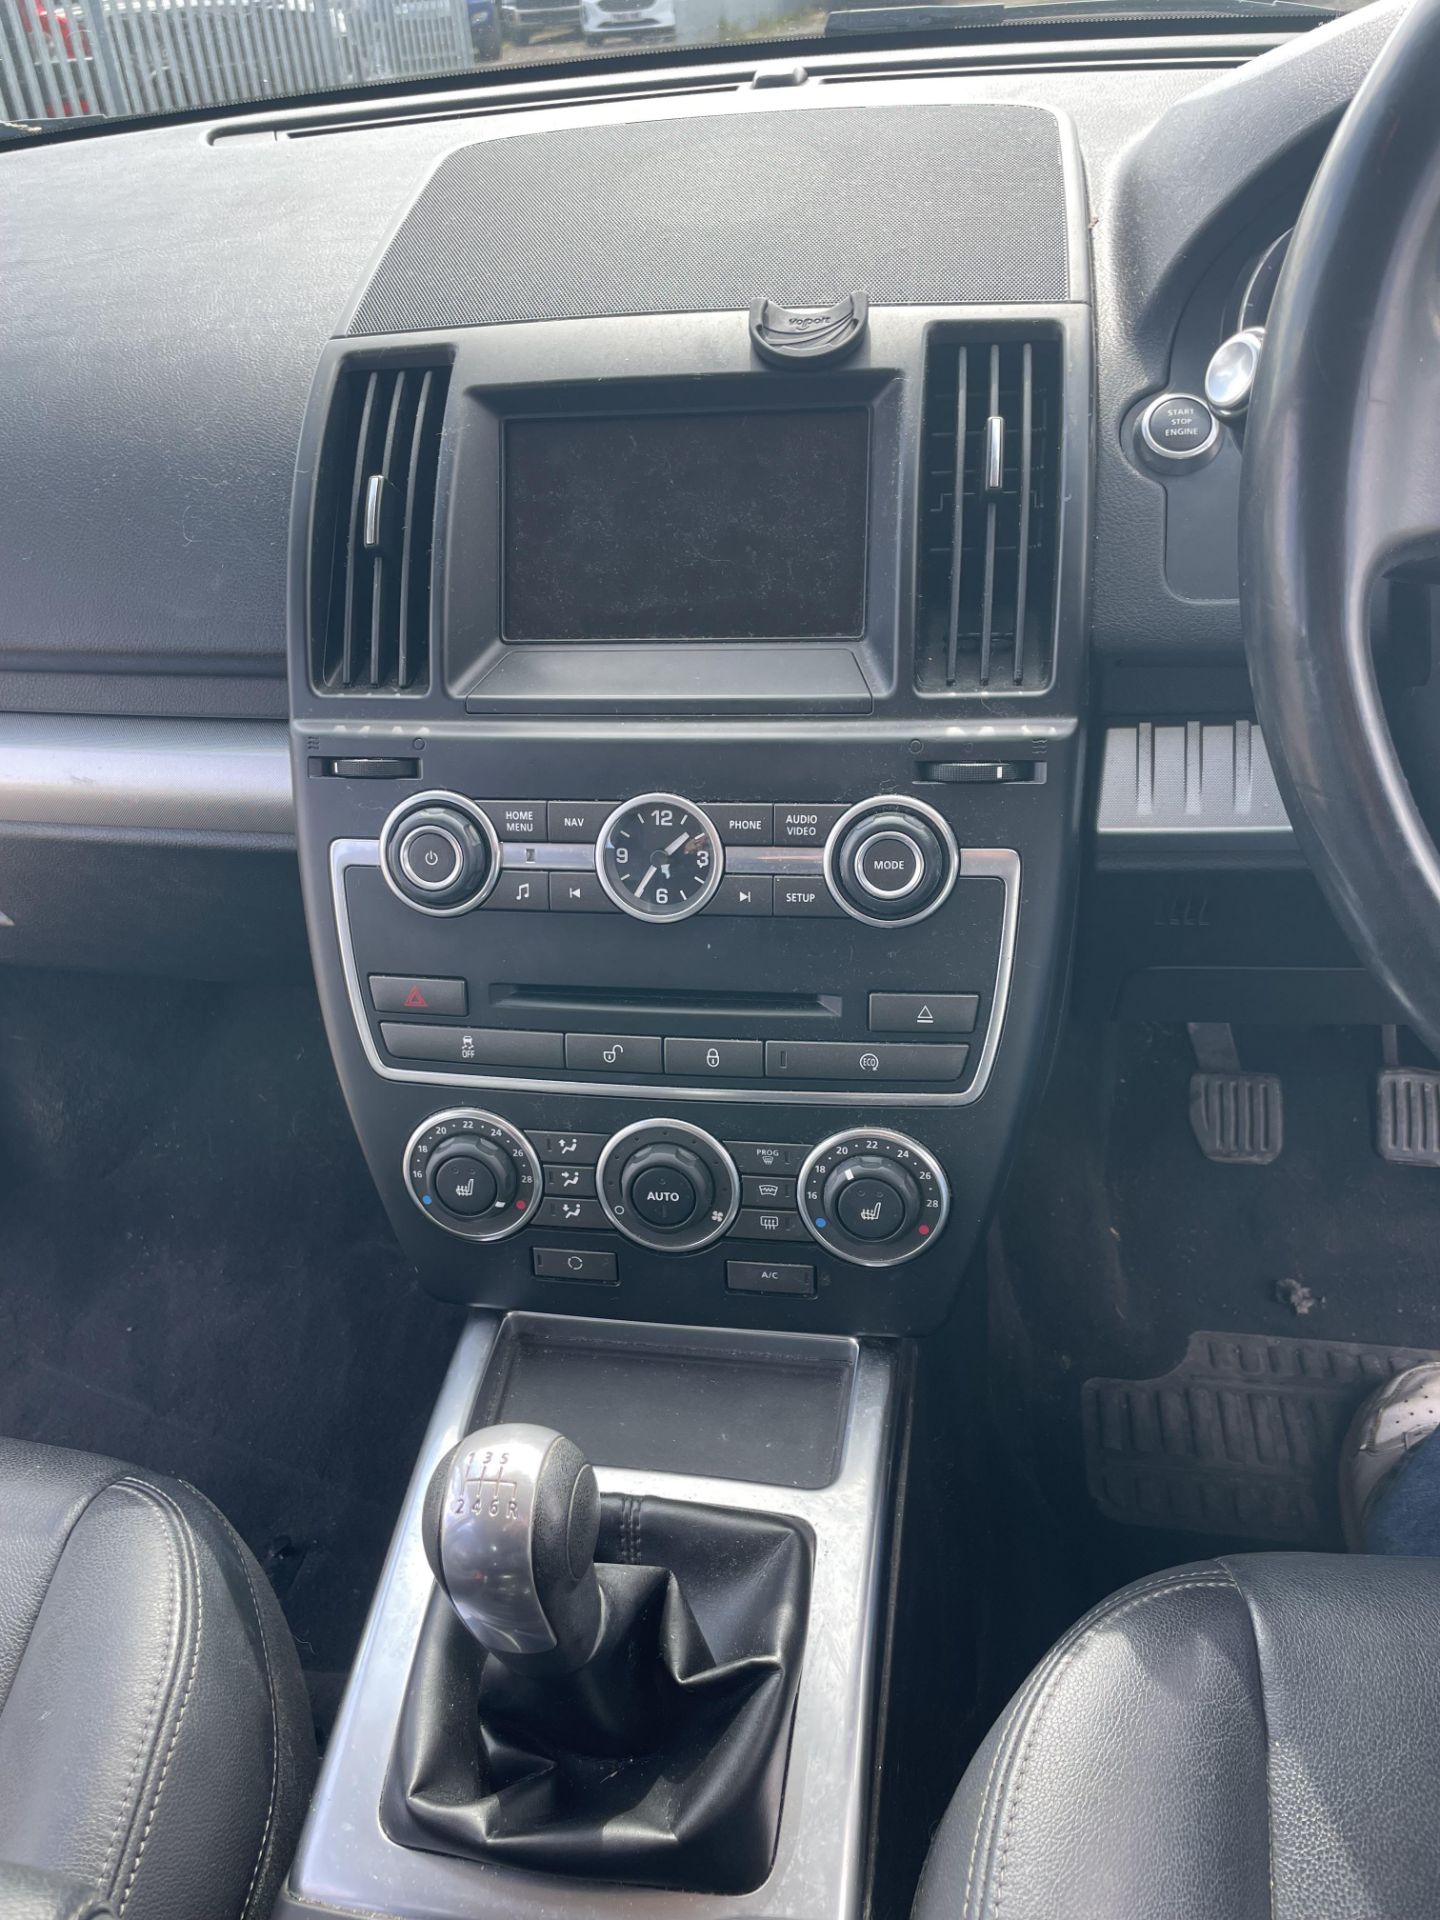 ** ON SALE ** Land Rover Freelander 2 ED4150 XS 2.2 2013 '62 Reg'- Parking Sensors- Alloy Wheels - Image 17 of 35